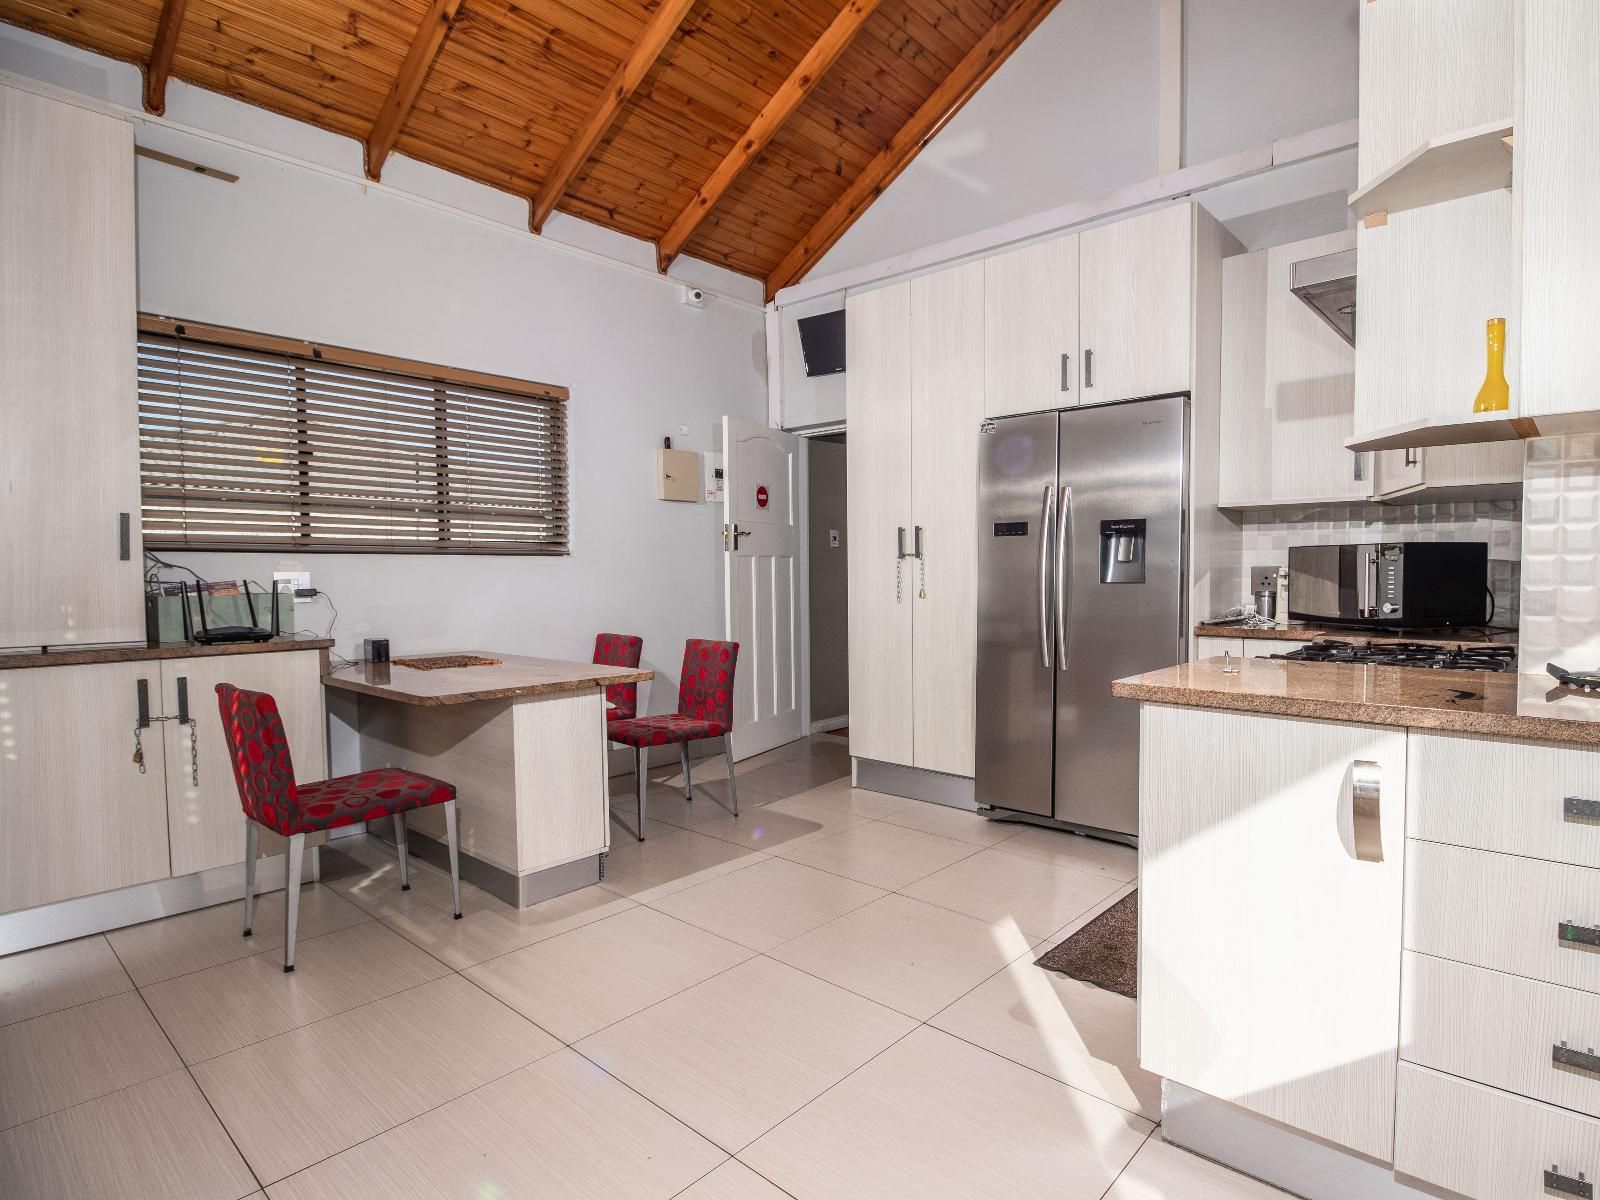 Cashmere Suites Cotswold Port Elizabeth Eastern Cape South Africa Kitchen